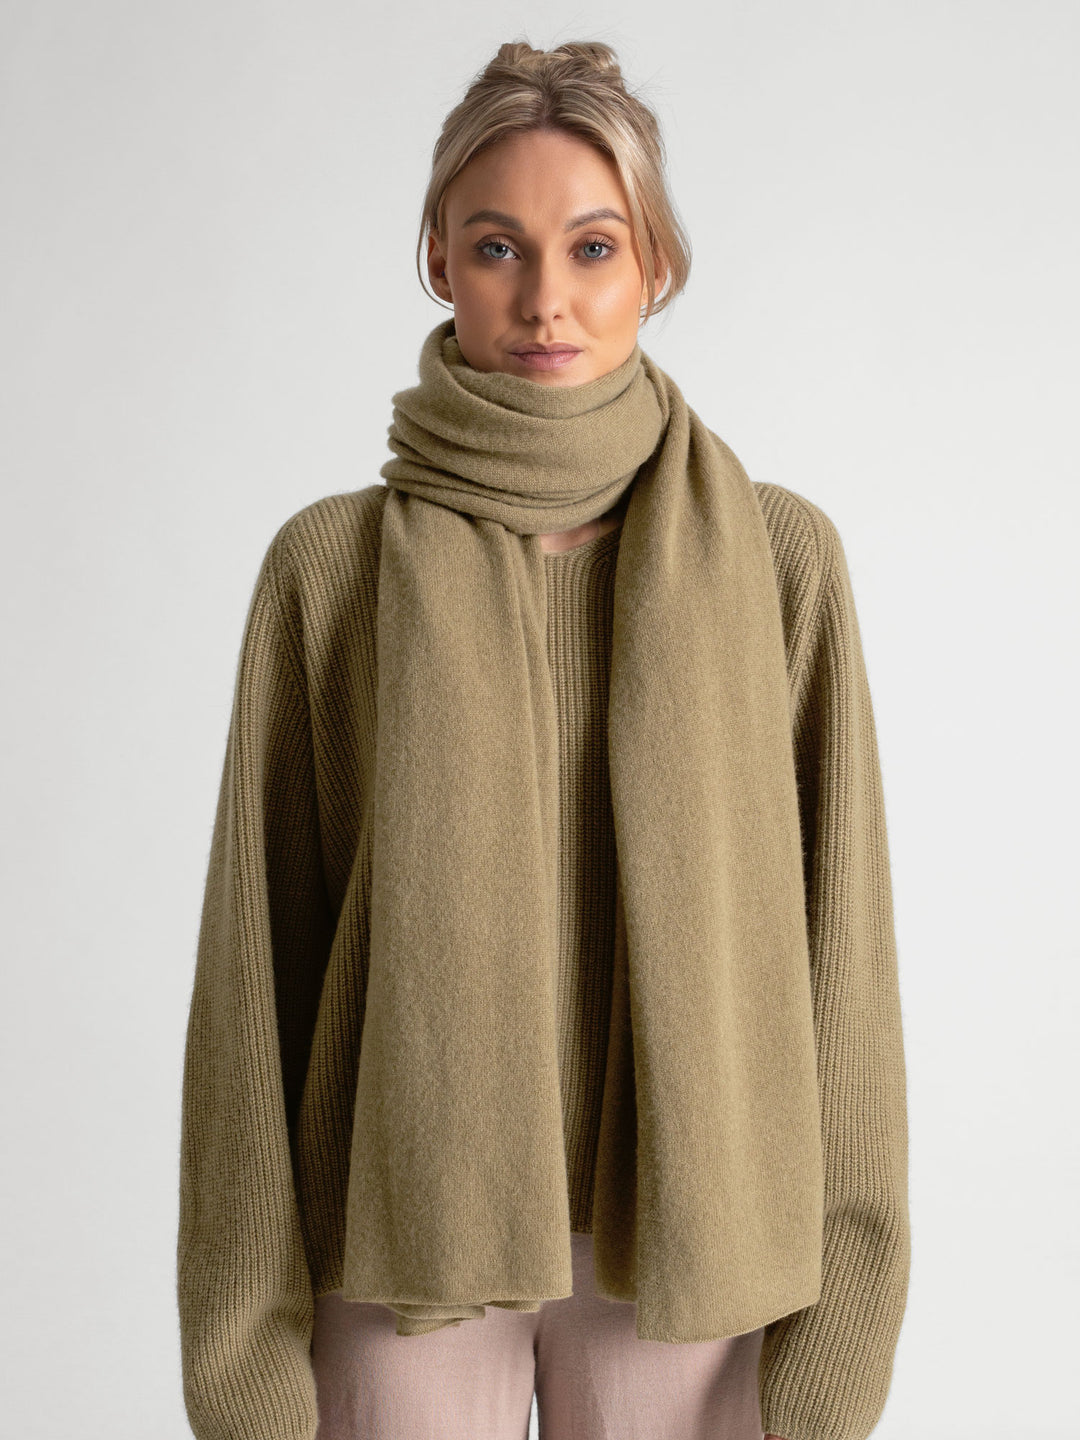 Cashmere scarf "Signature" in 100% cashmere. Color: Olive. Scandinavian design by Kashmina